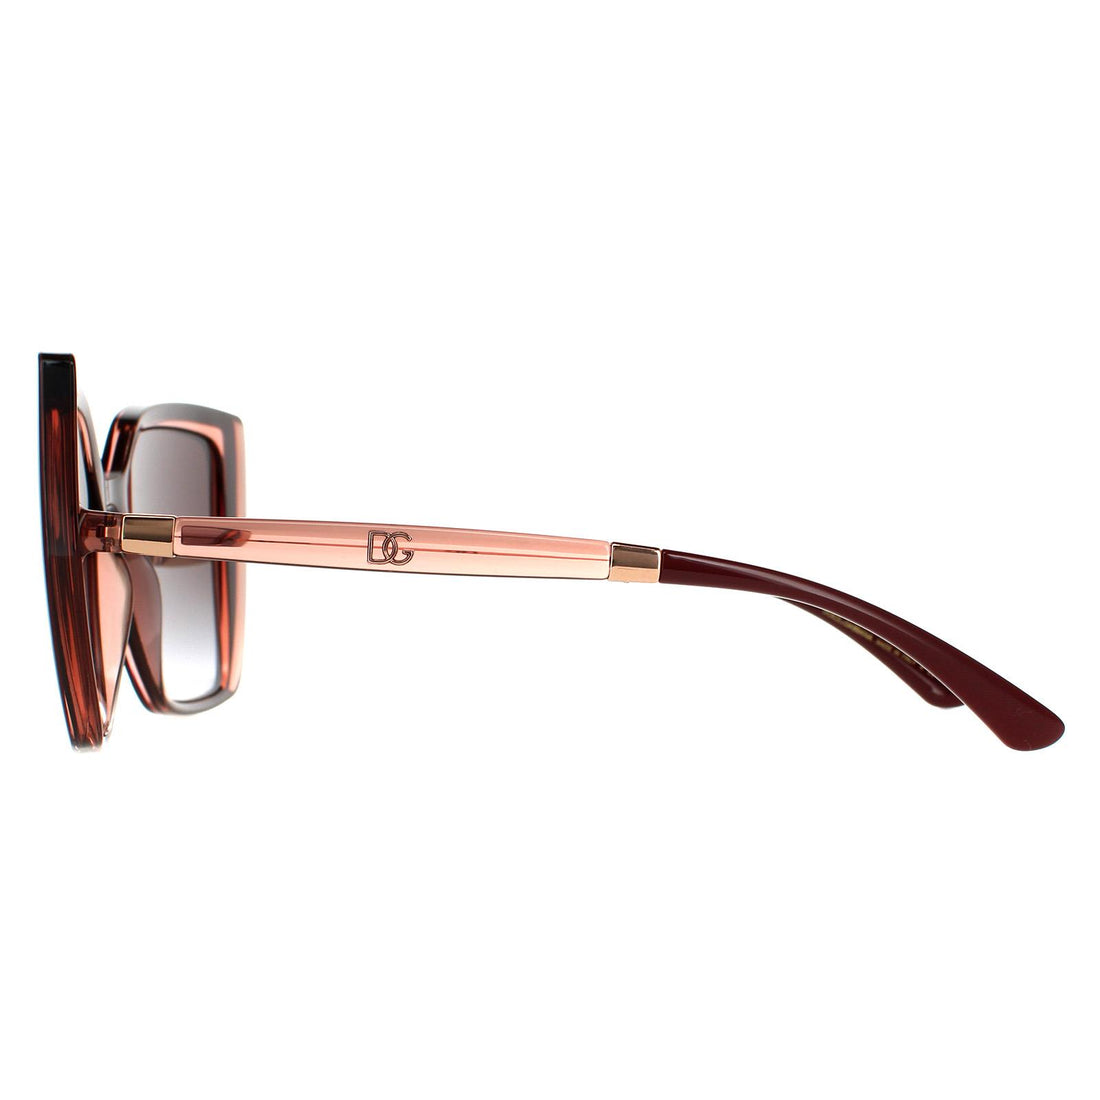 Dolce & Gabbana DG6138 Sunglasses